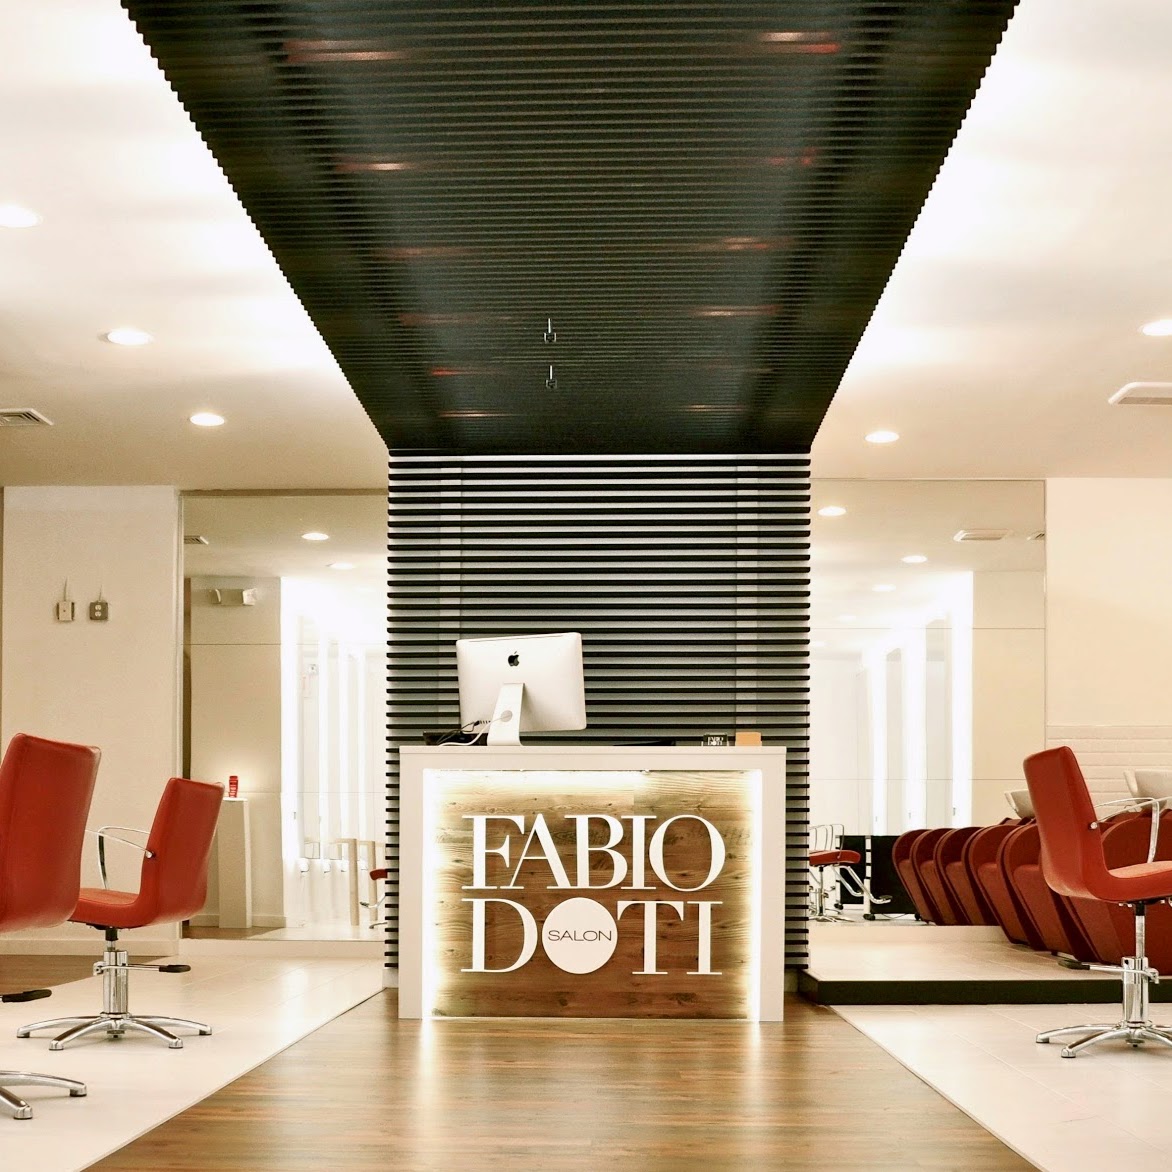 Photo of Fabio Doti Salon in New York City, New York, United States - 1 Picture of Point of interest, Establishment, Beauty salon, Hair care